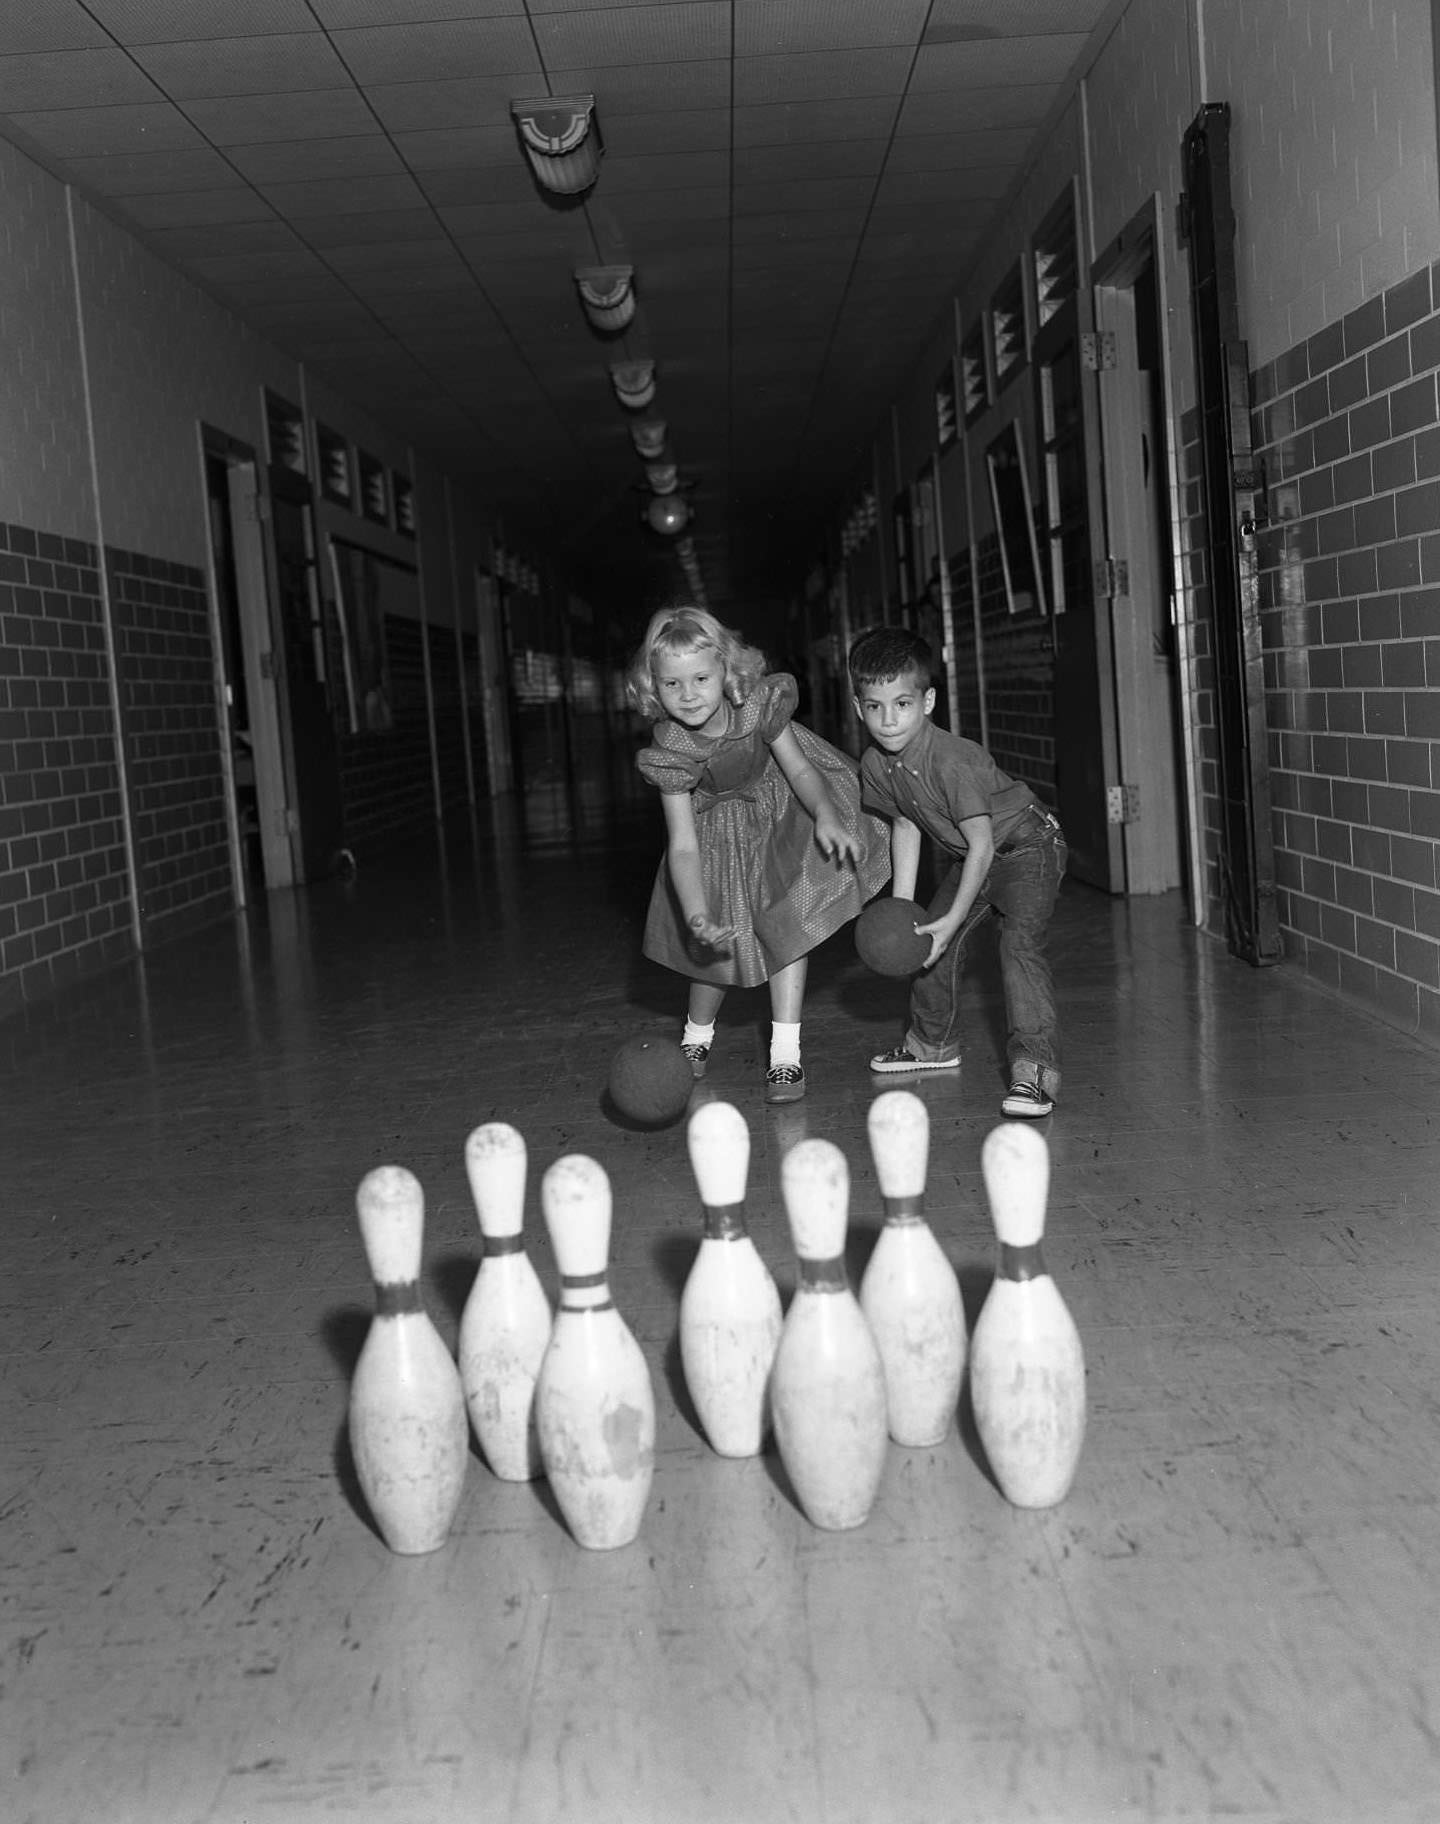 Two children bowling in a school hallway, 1961